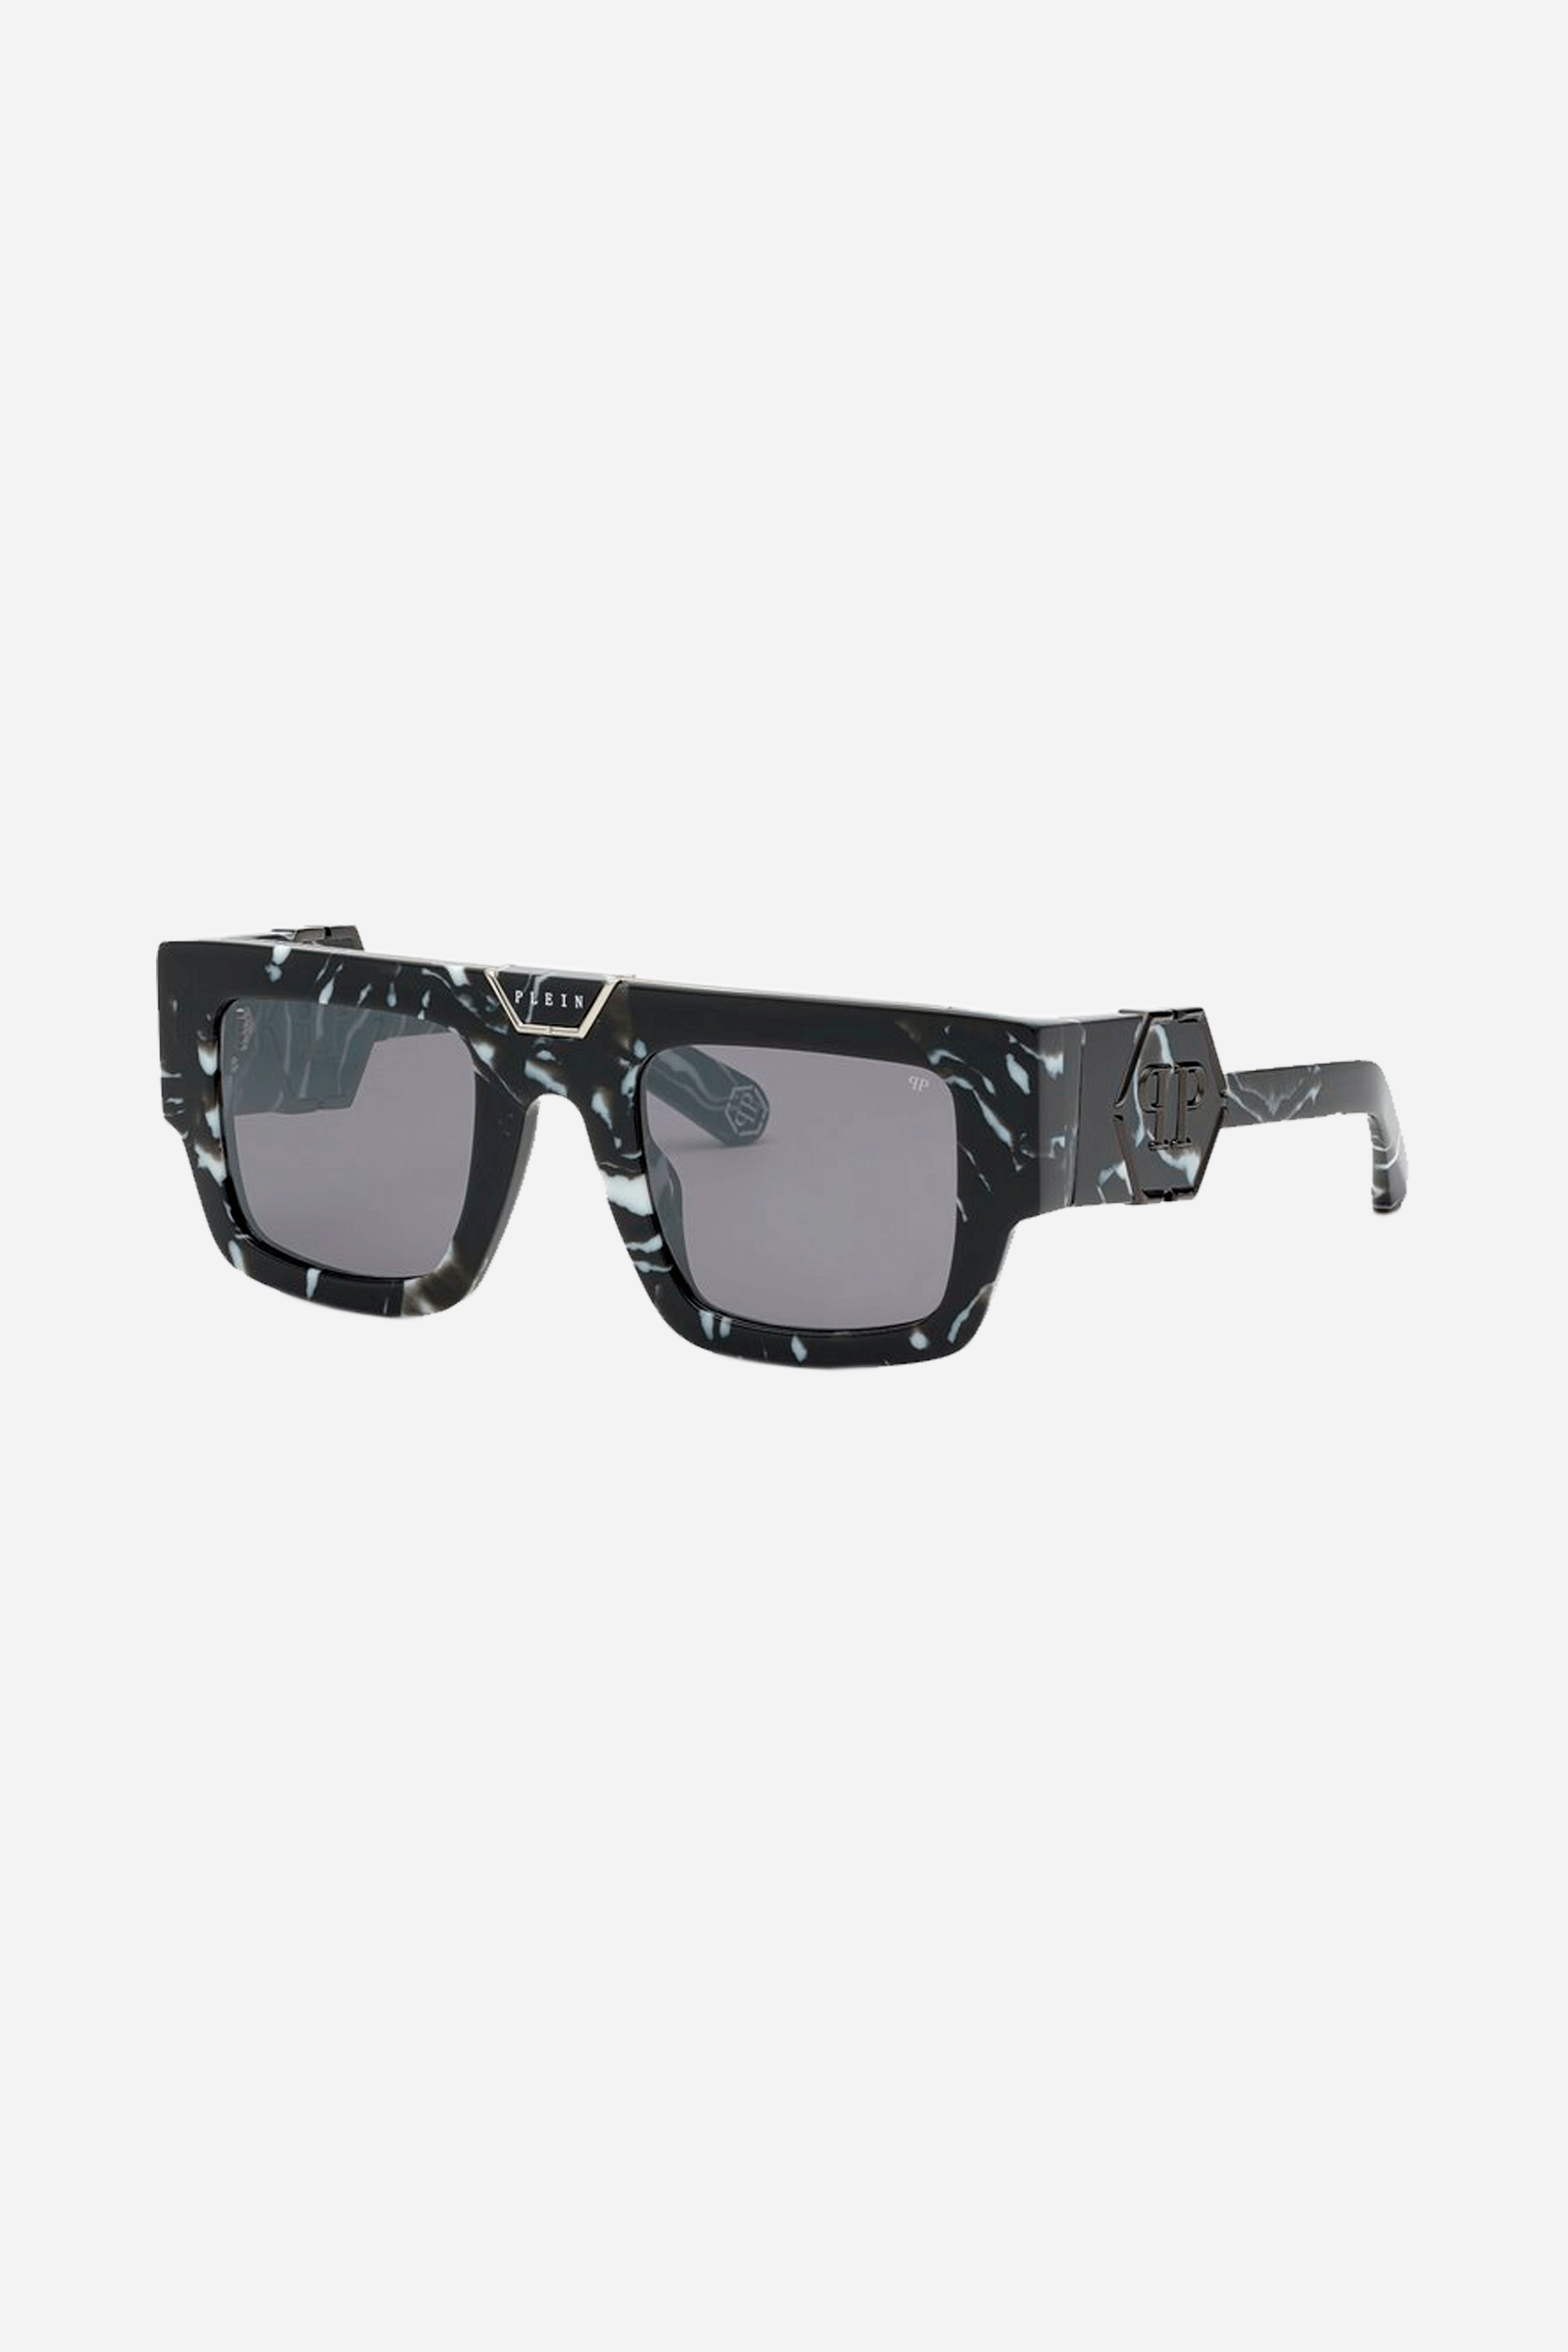 Philipp Plein squared marble sunglasses - Eyewear Club